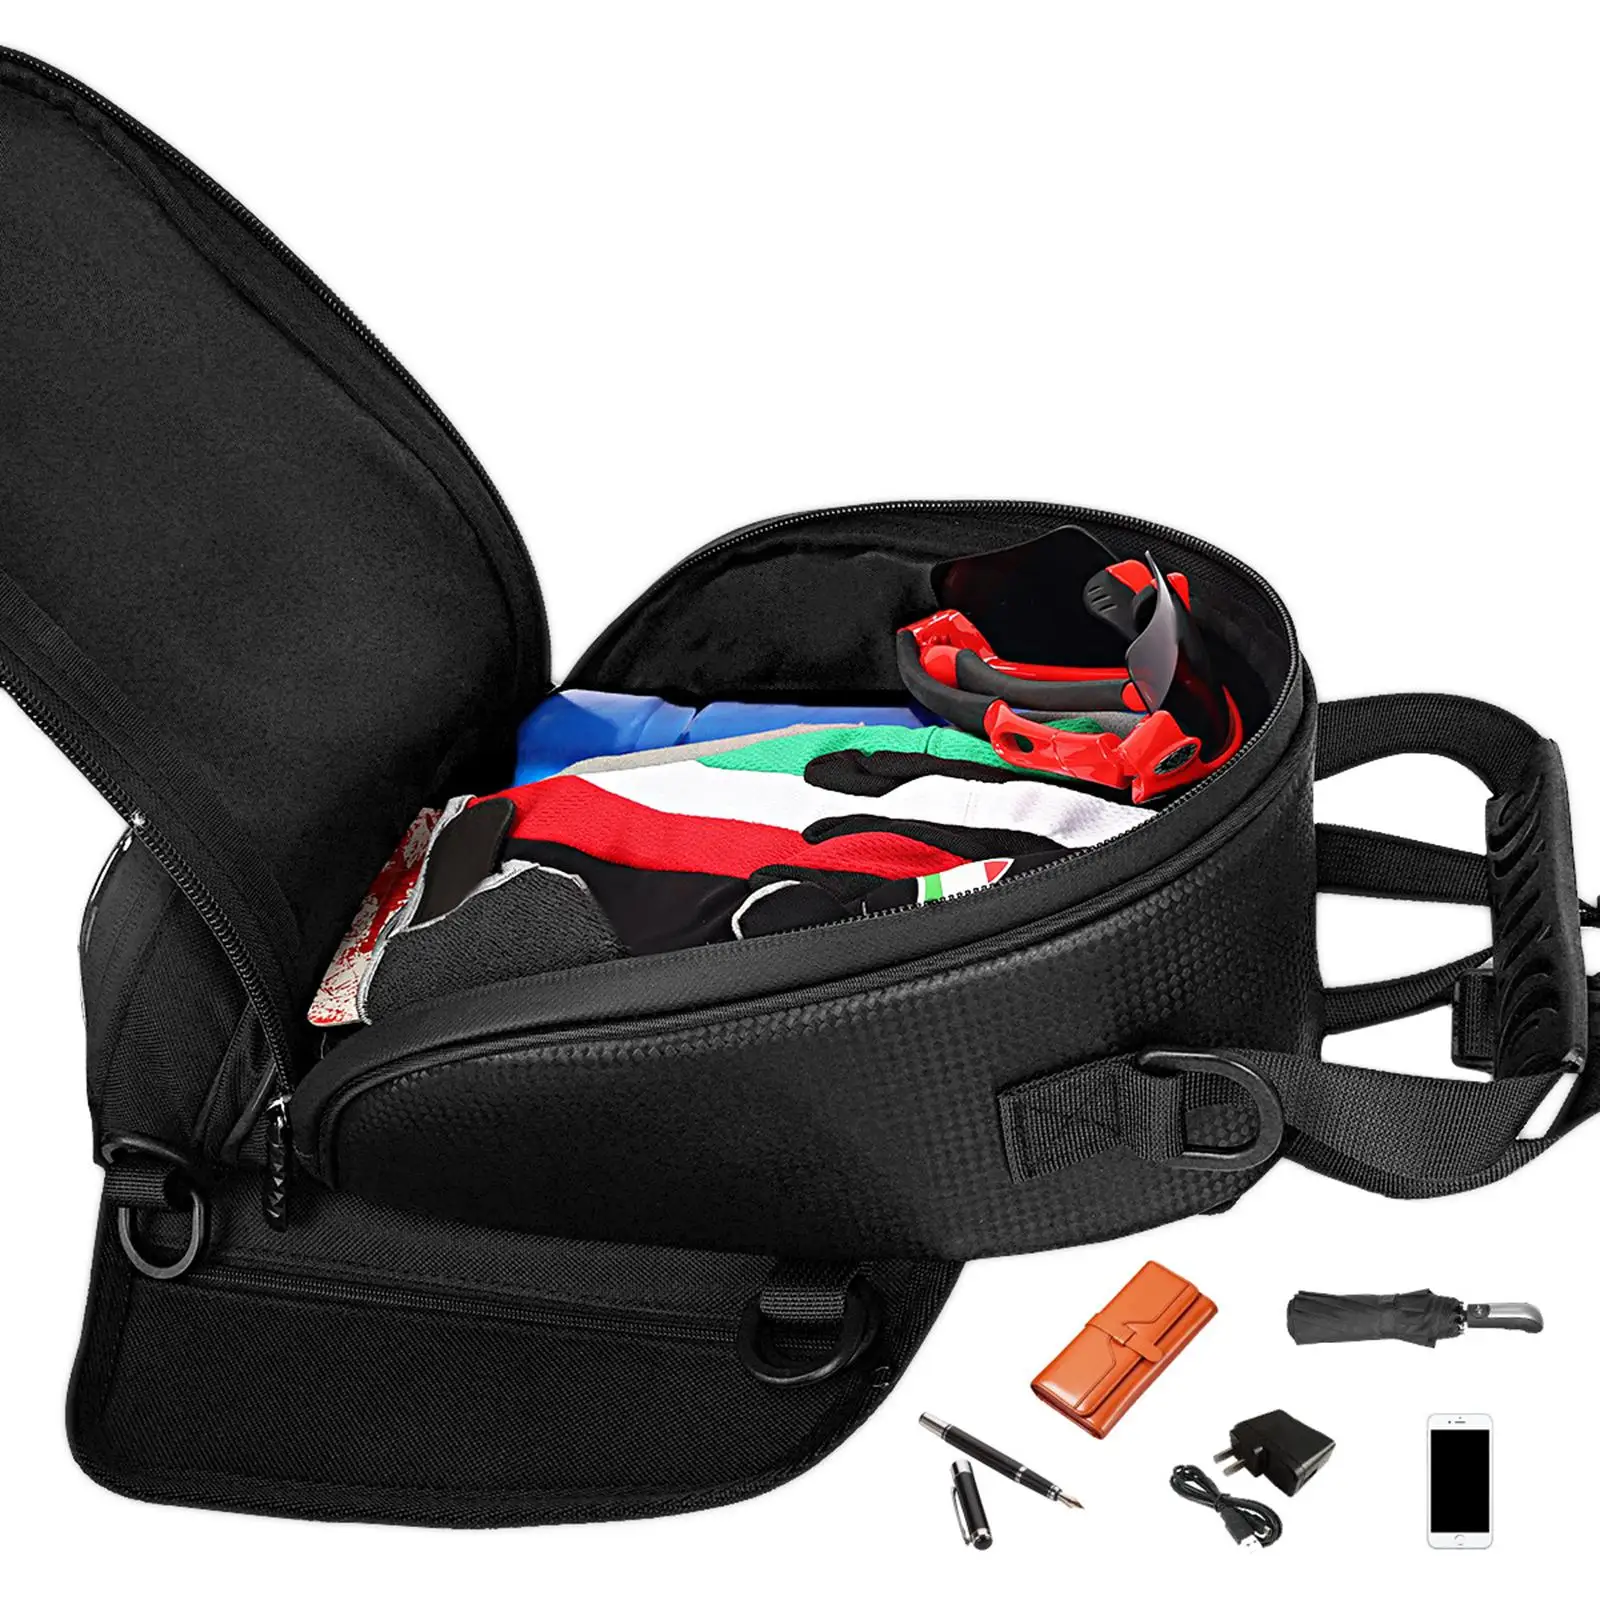 Motorbike Gas Oil Tank Bag Waterproof Portable Convenient for Short Trip Easily